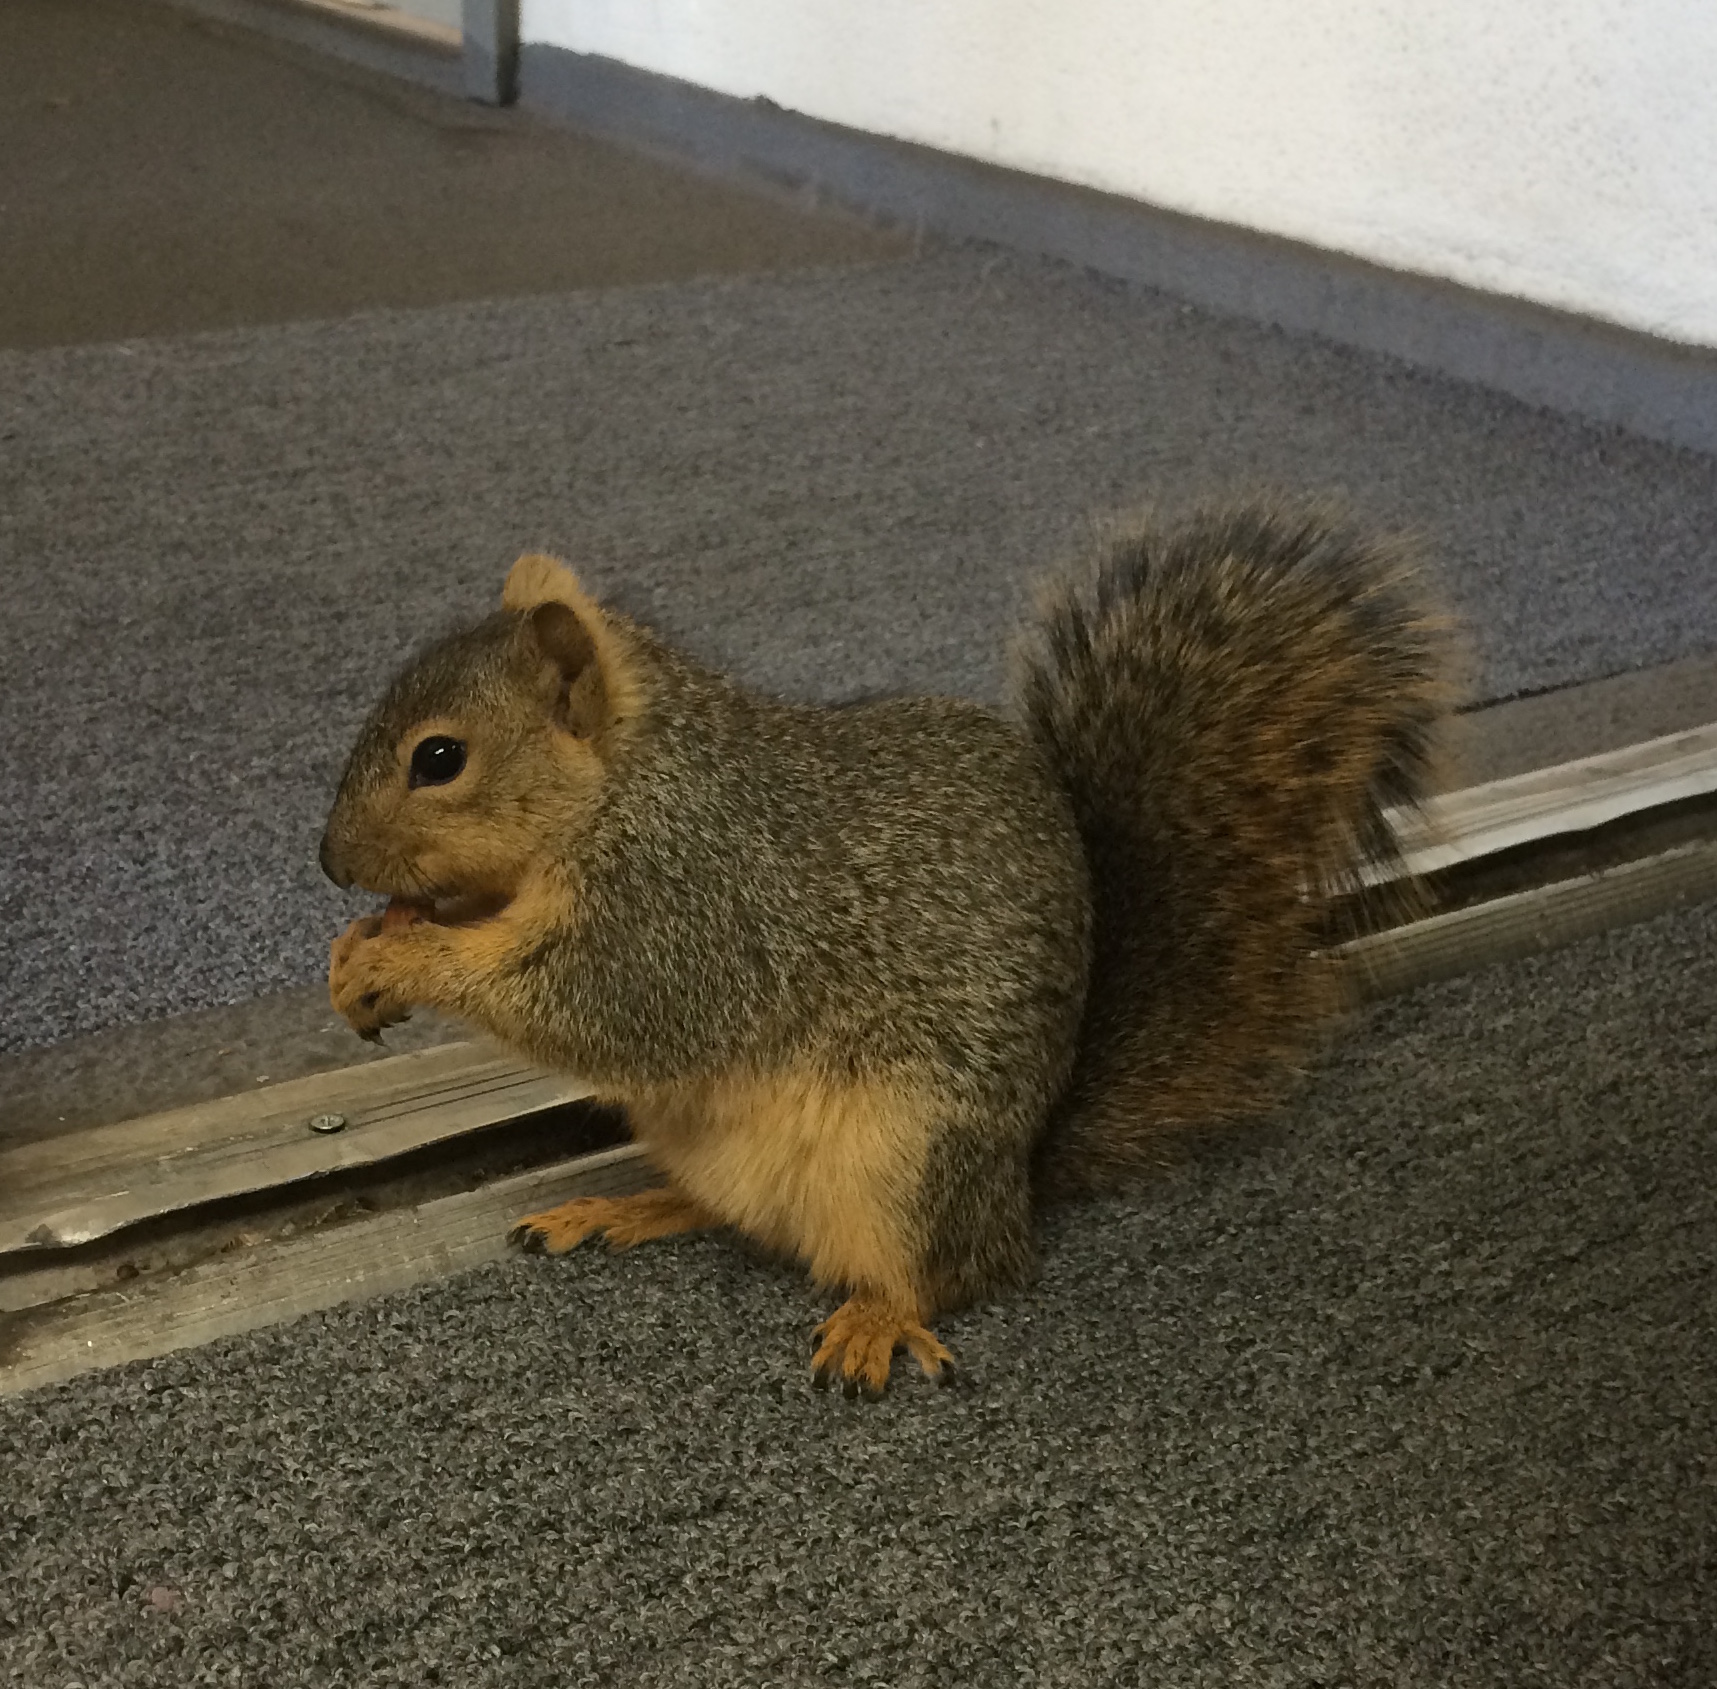 Bernie Sanders, the resident squirrel at work.